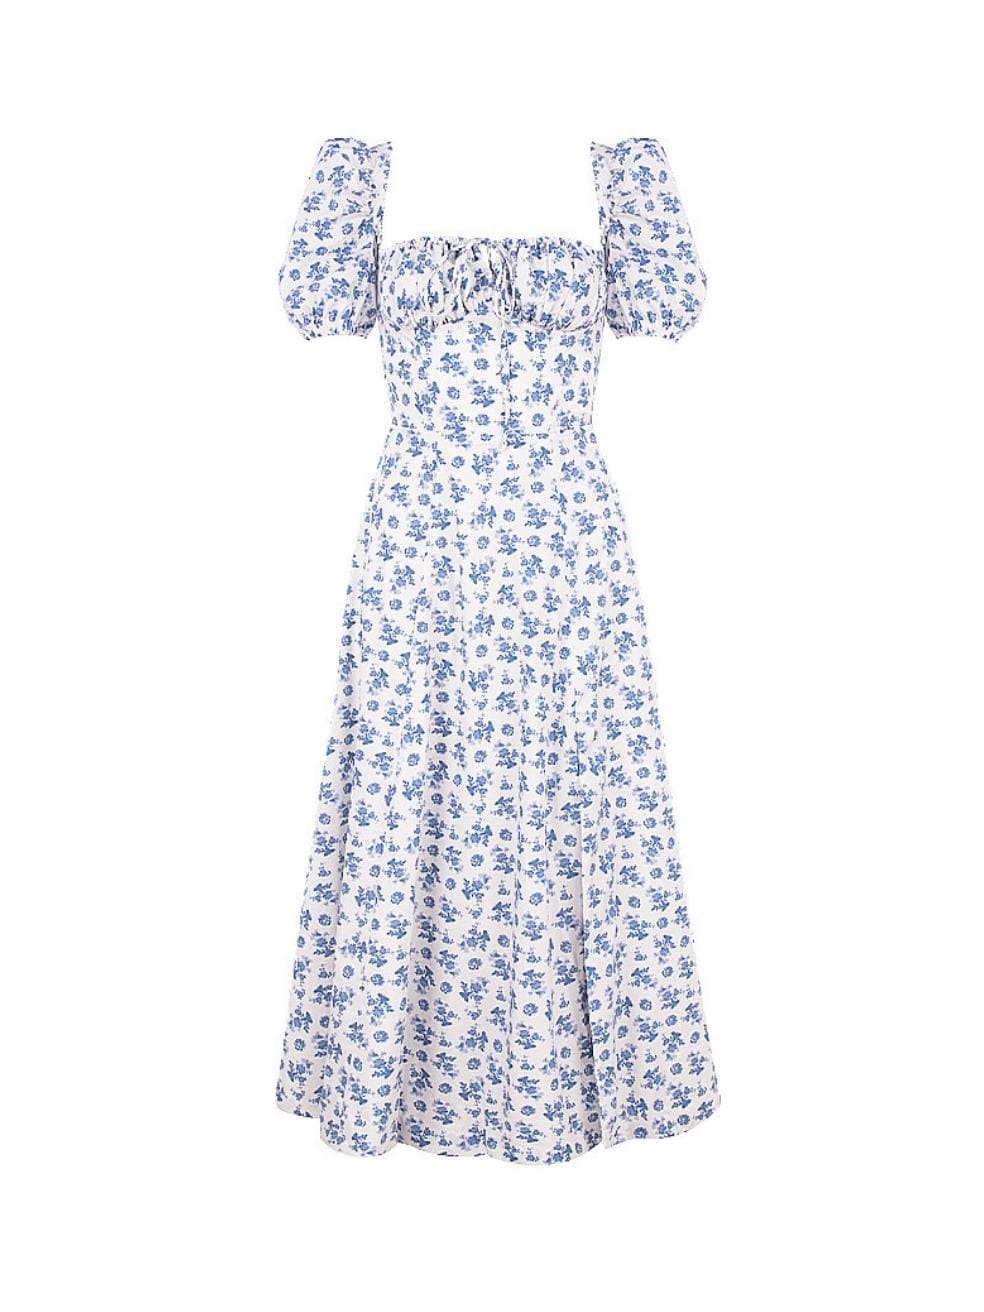 Tallulah Dress in Blue White Floral